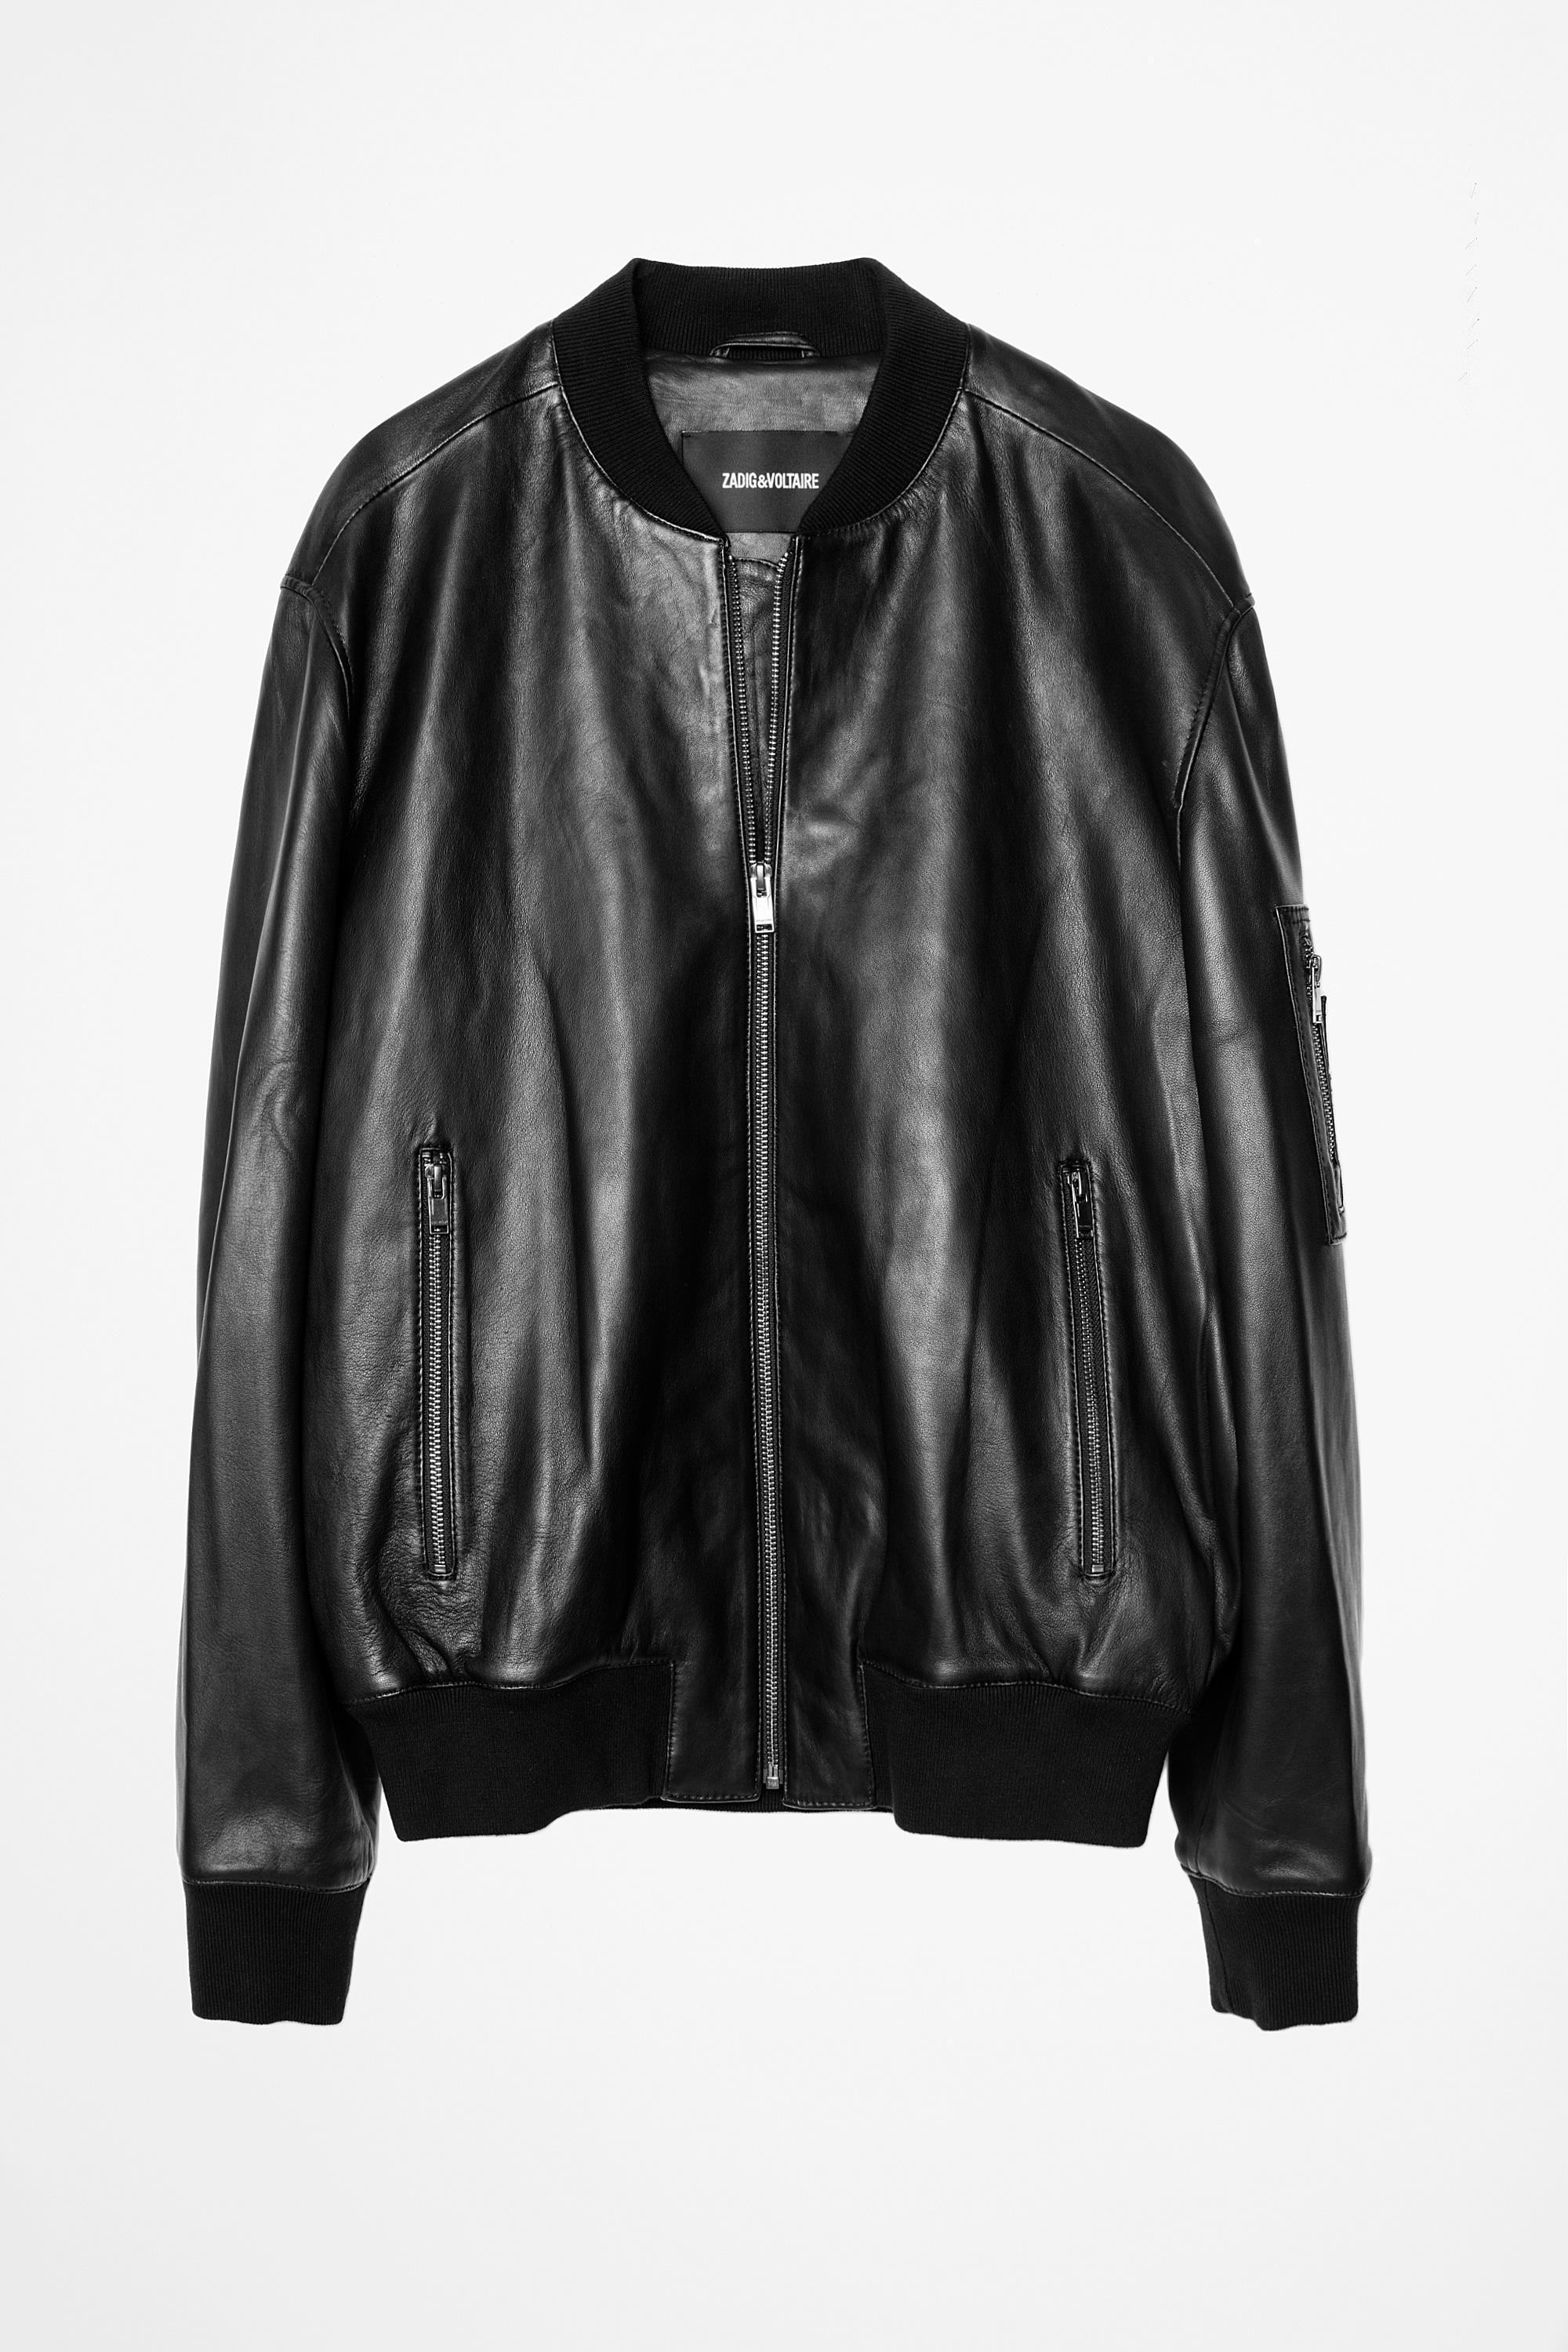 Zadig & Voltaire Leather Bobby Men's Bomber Jacket in Black for Men - Lyst